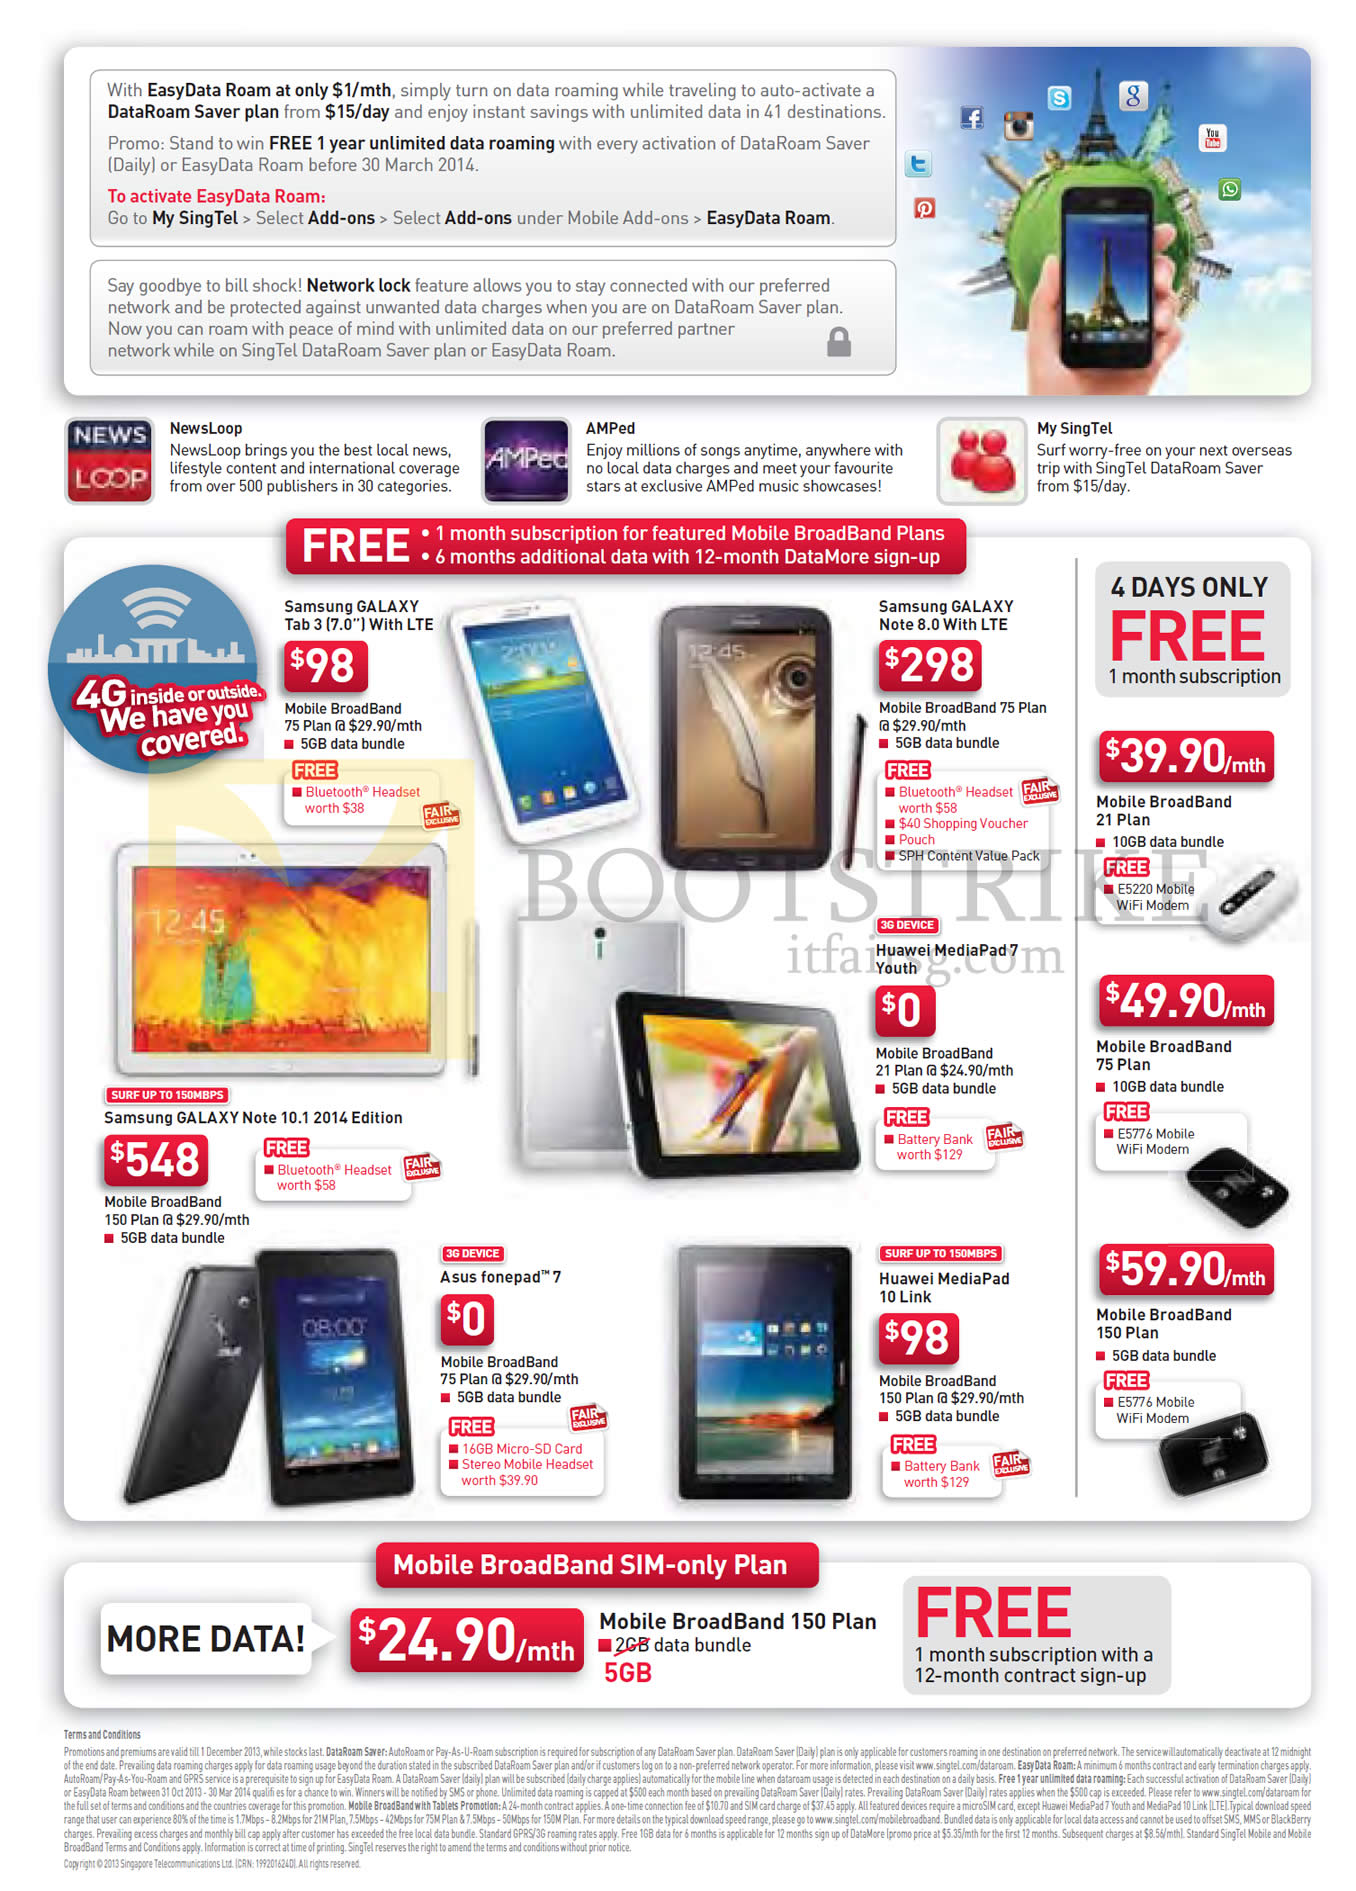 SITEX 2013 price list image brochure of Singtel Mobile Broadband Plans, Samsung Galaxy Tab 3 7.0, Note 8.0, Note 10.1 2014 Edition, ASUS Fonepad 7, Huawei MediaPad 10 Link